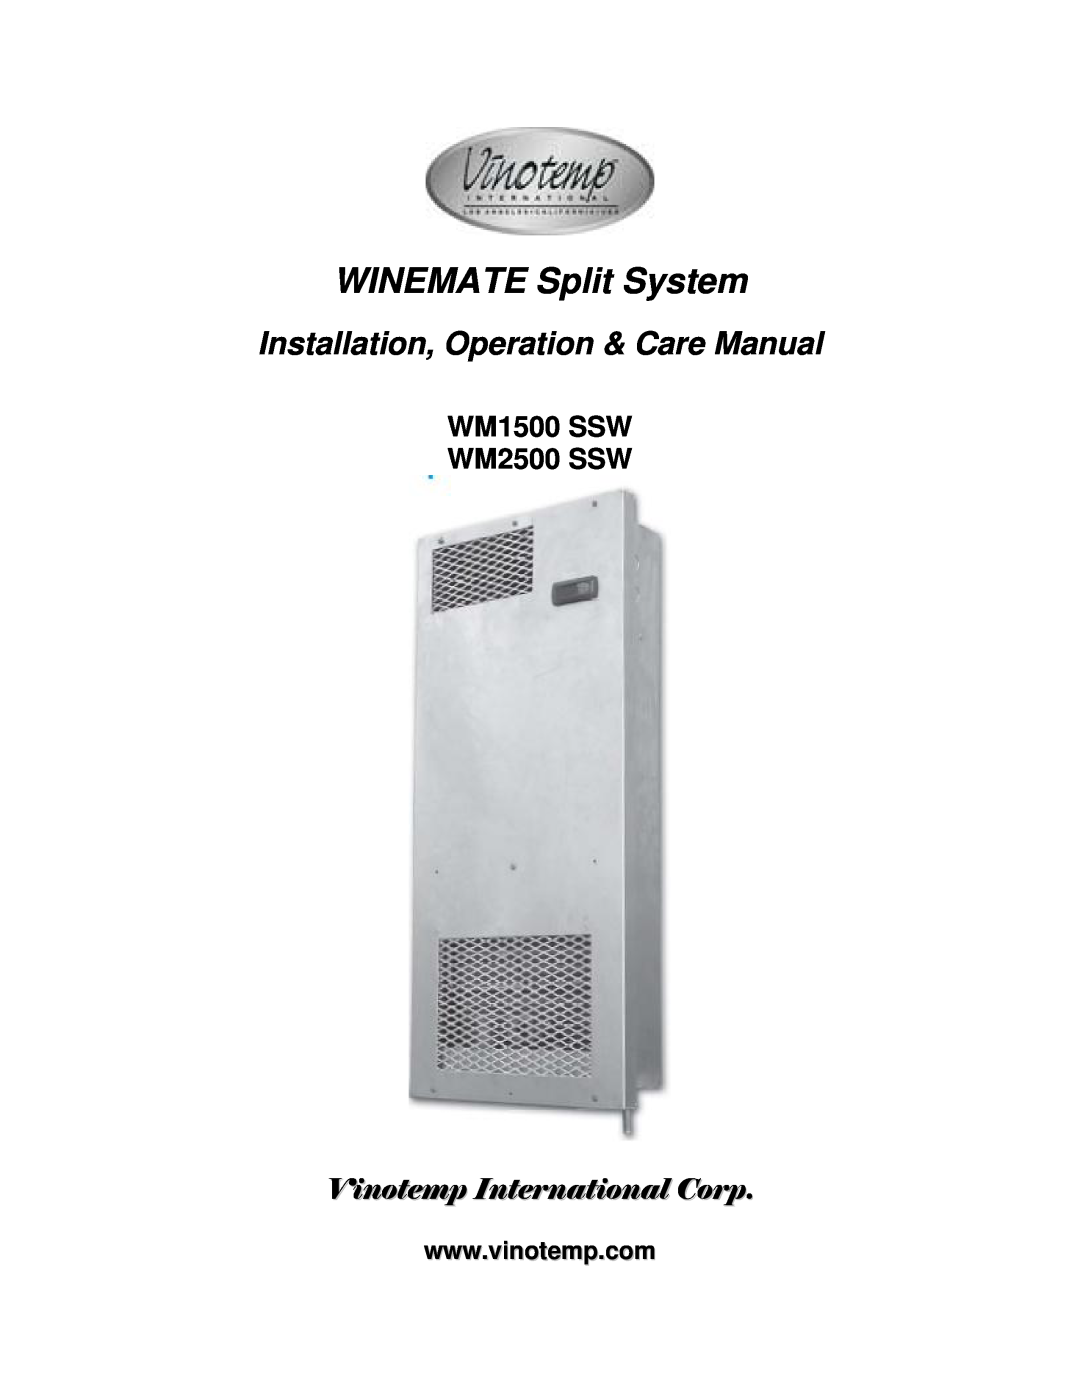 Vinotemp manual WM1500 SSW WM2500 SSW, WINEMATE Split System, Installation, Operation & Care Manual 